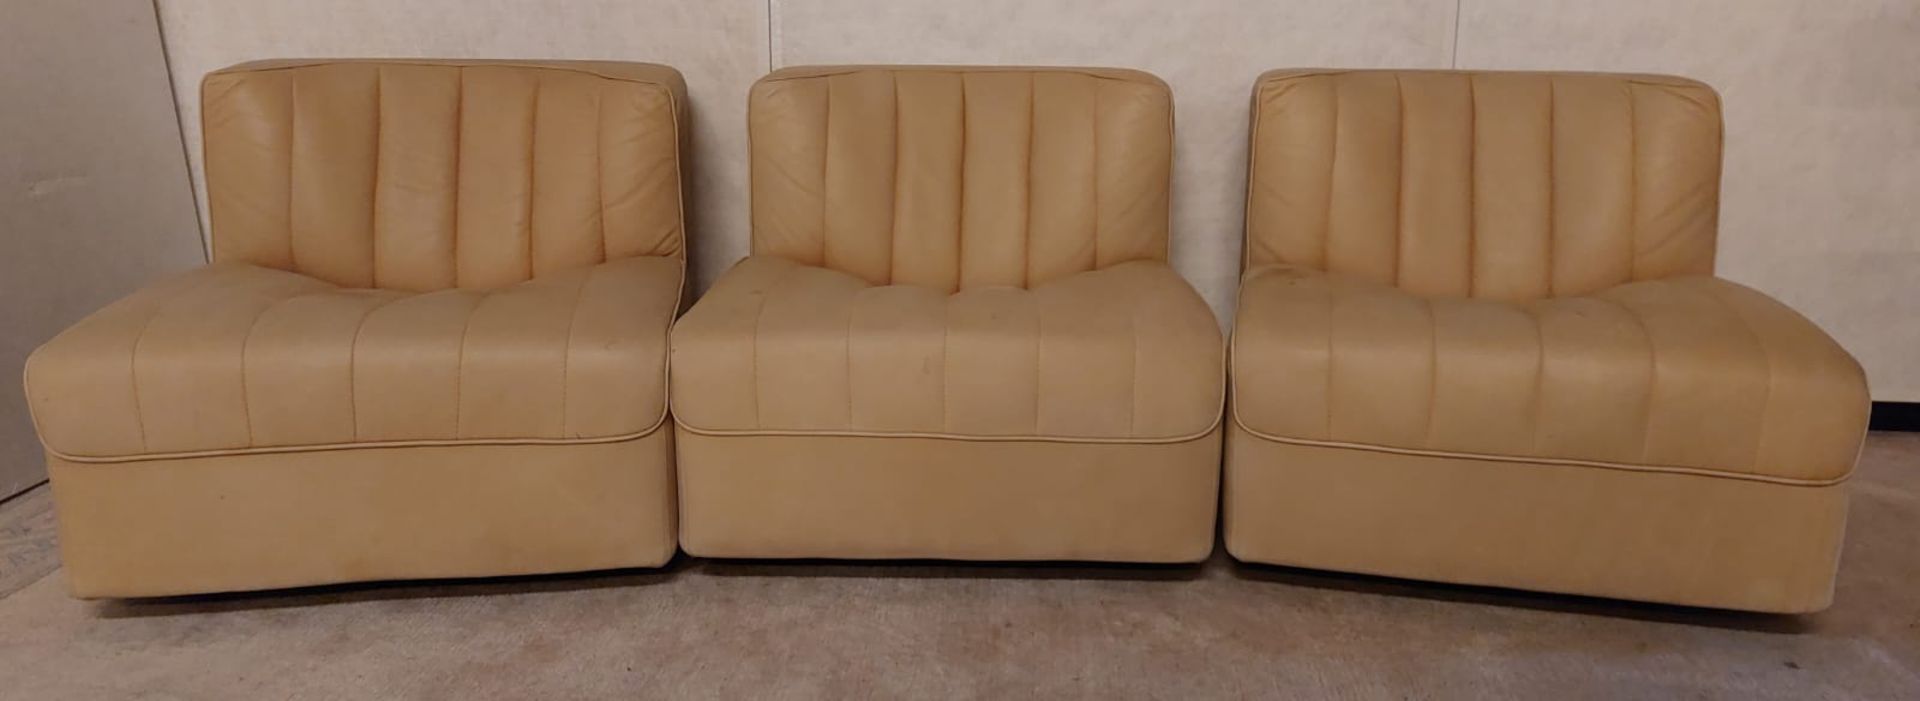 Drei modulare Sessel, Leder, um 1970.